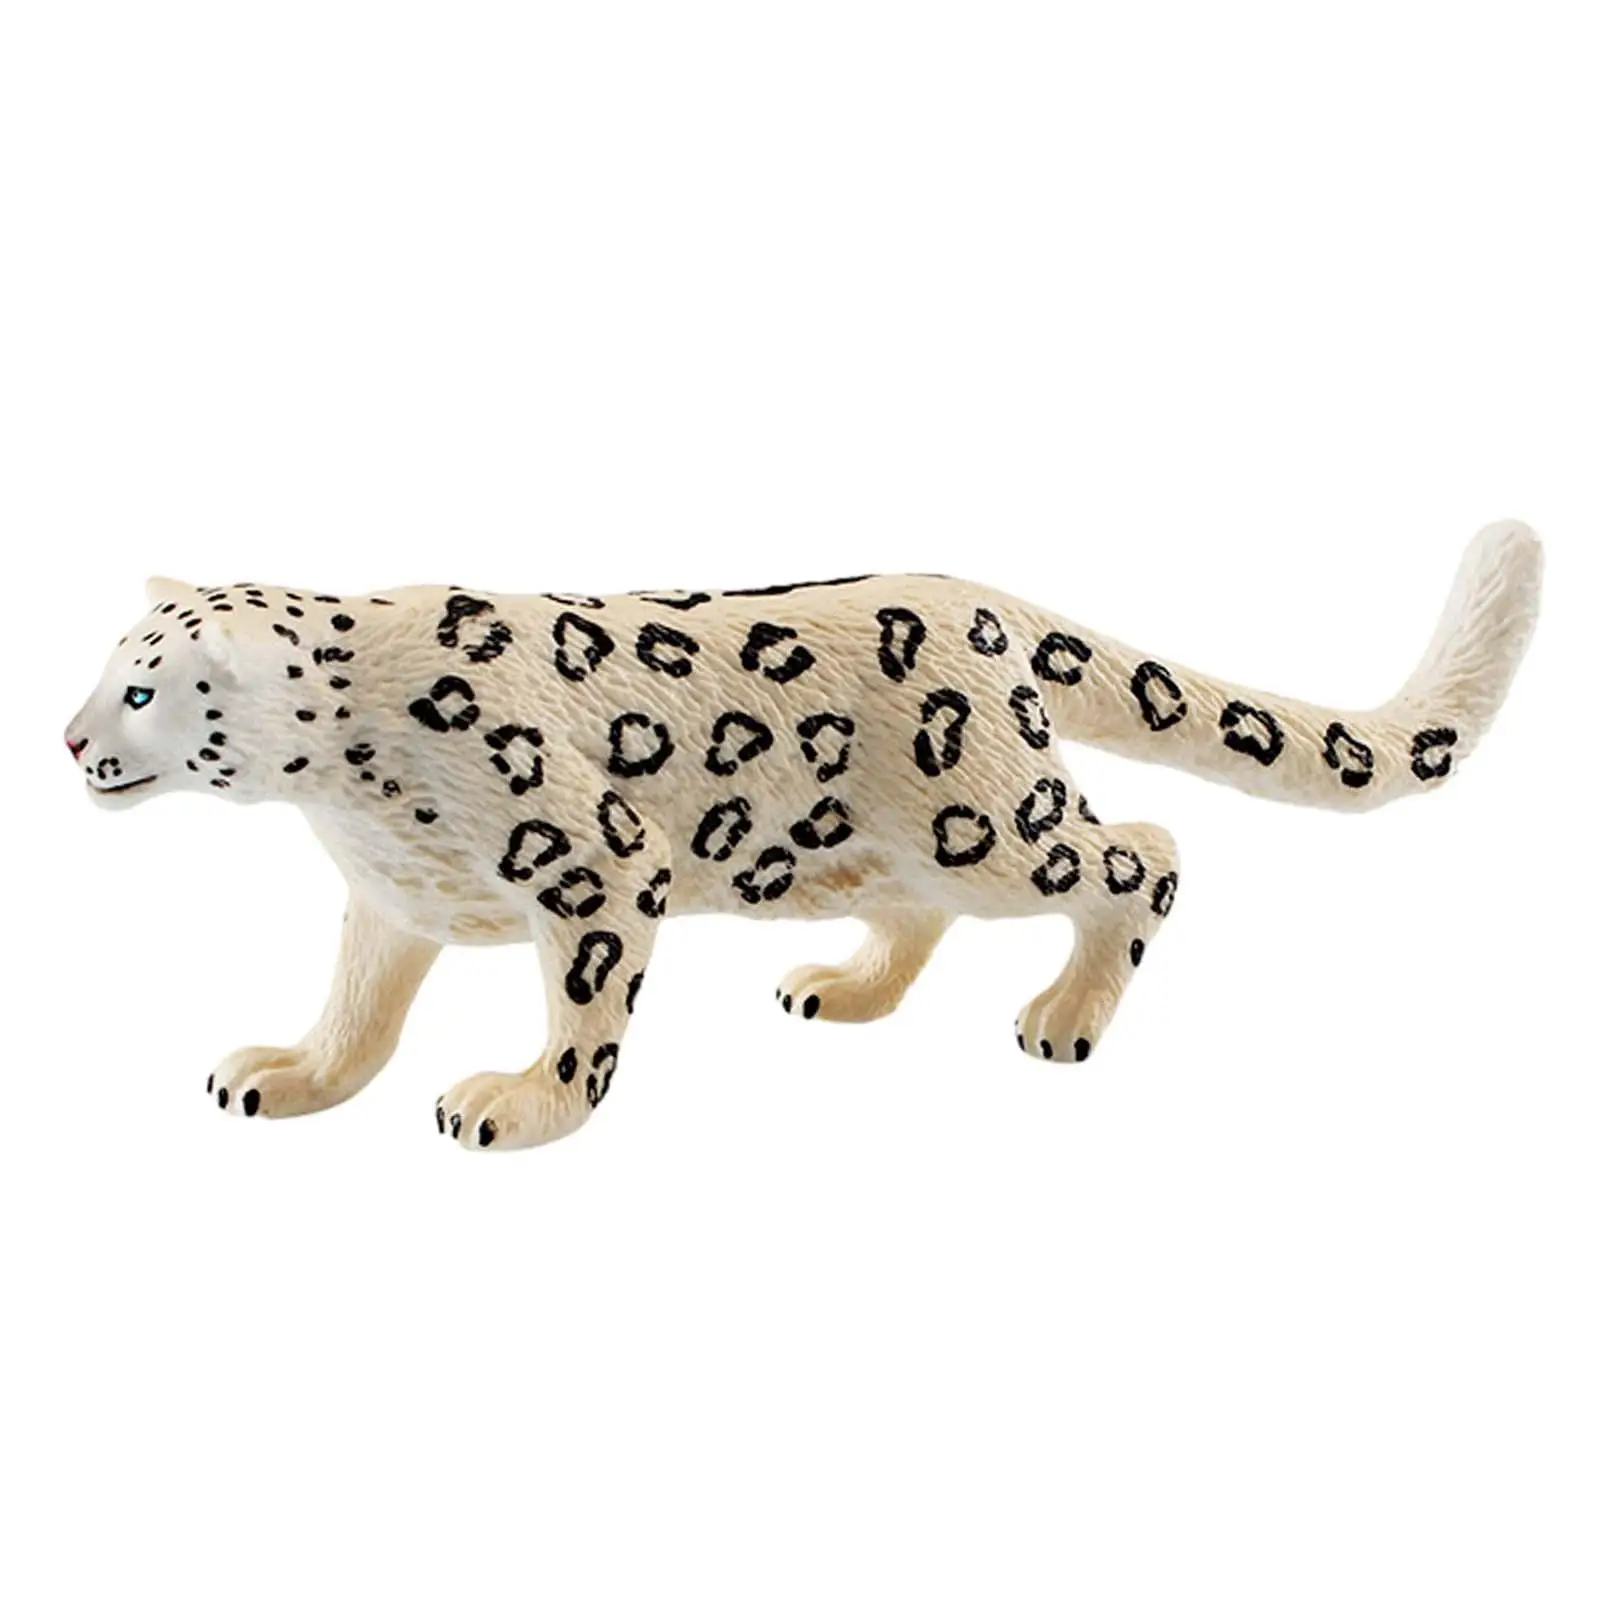 Leopard Toy Figurine Simulation Wildlife Animal Statue Preschool Leopard Animal Figures for Cake Topper Xmas Present